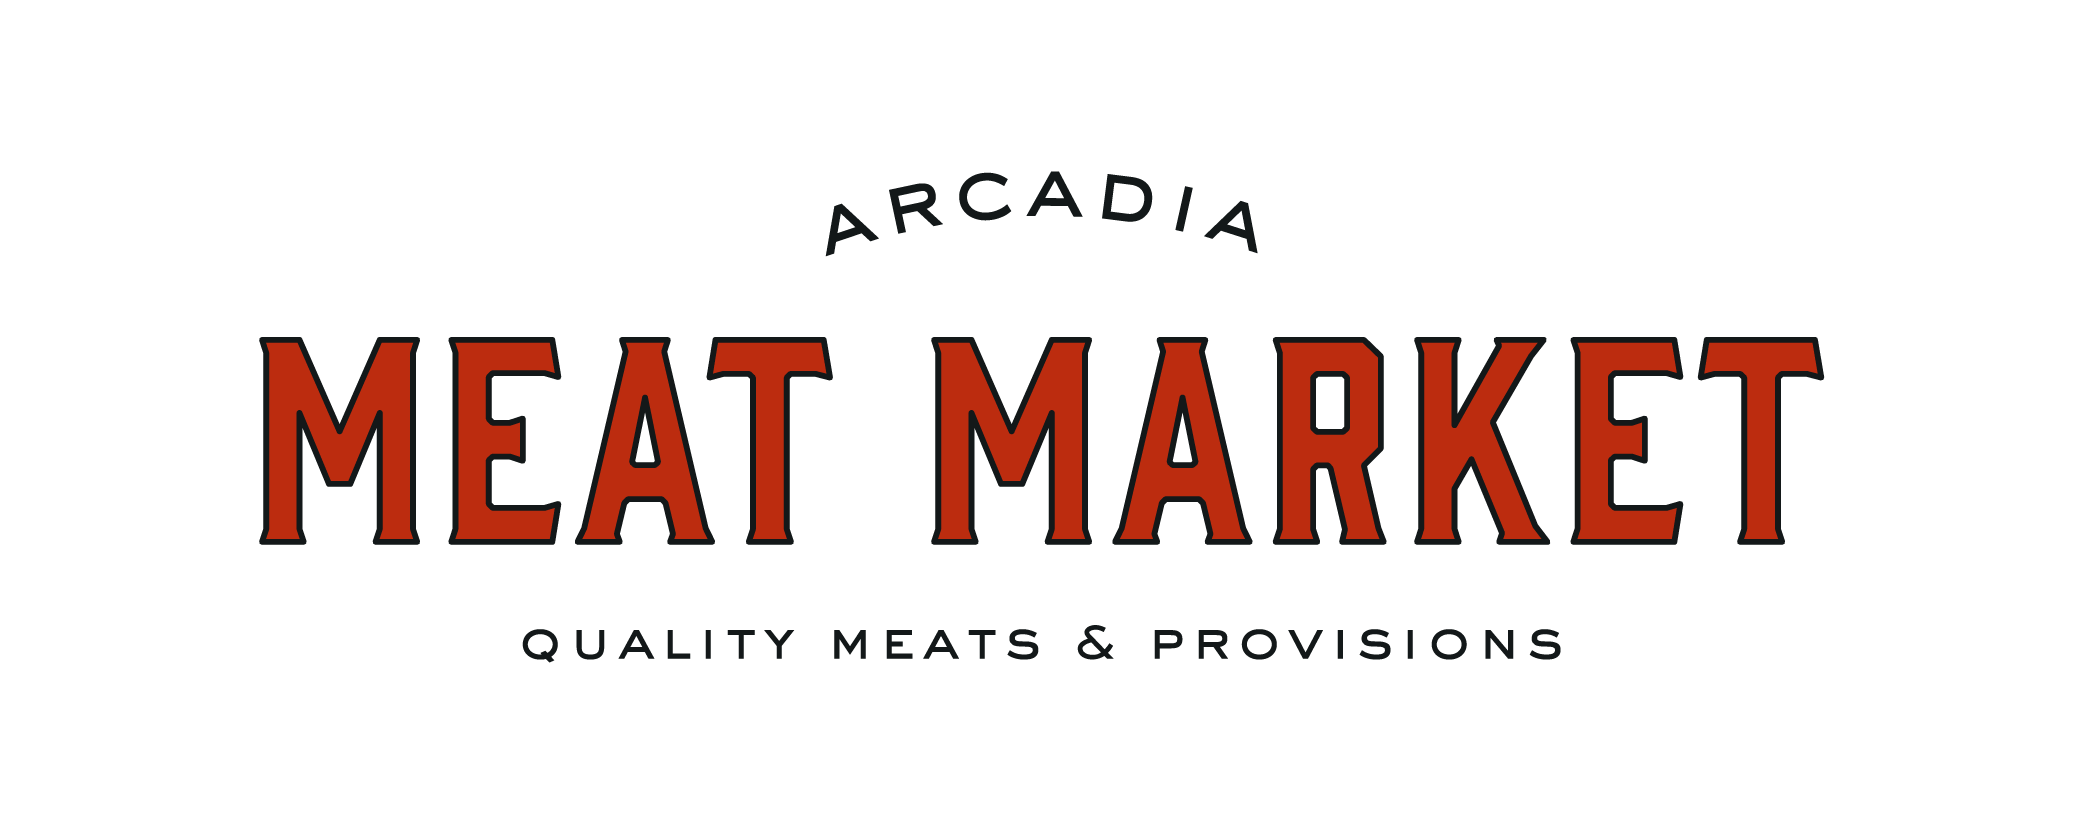 Arcadia Meat Market